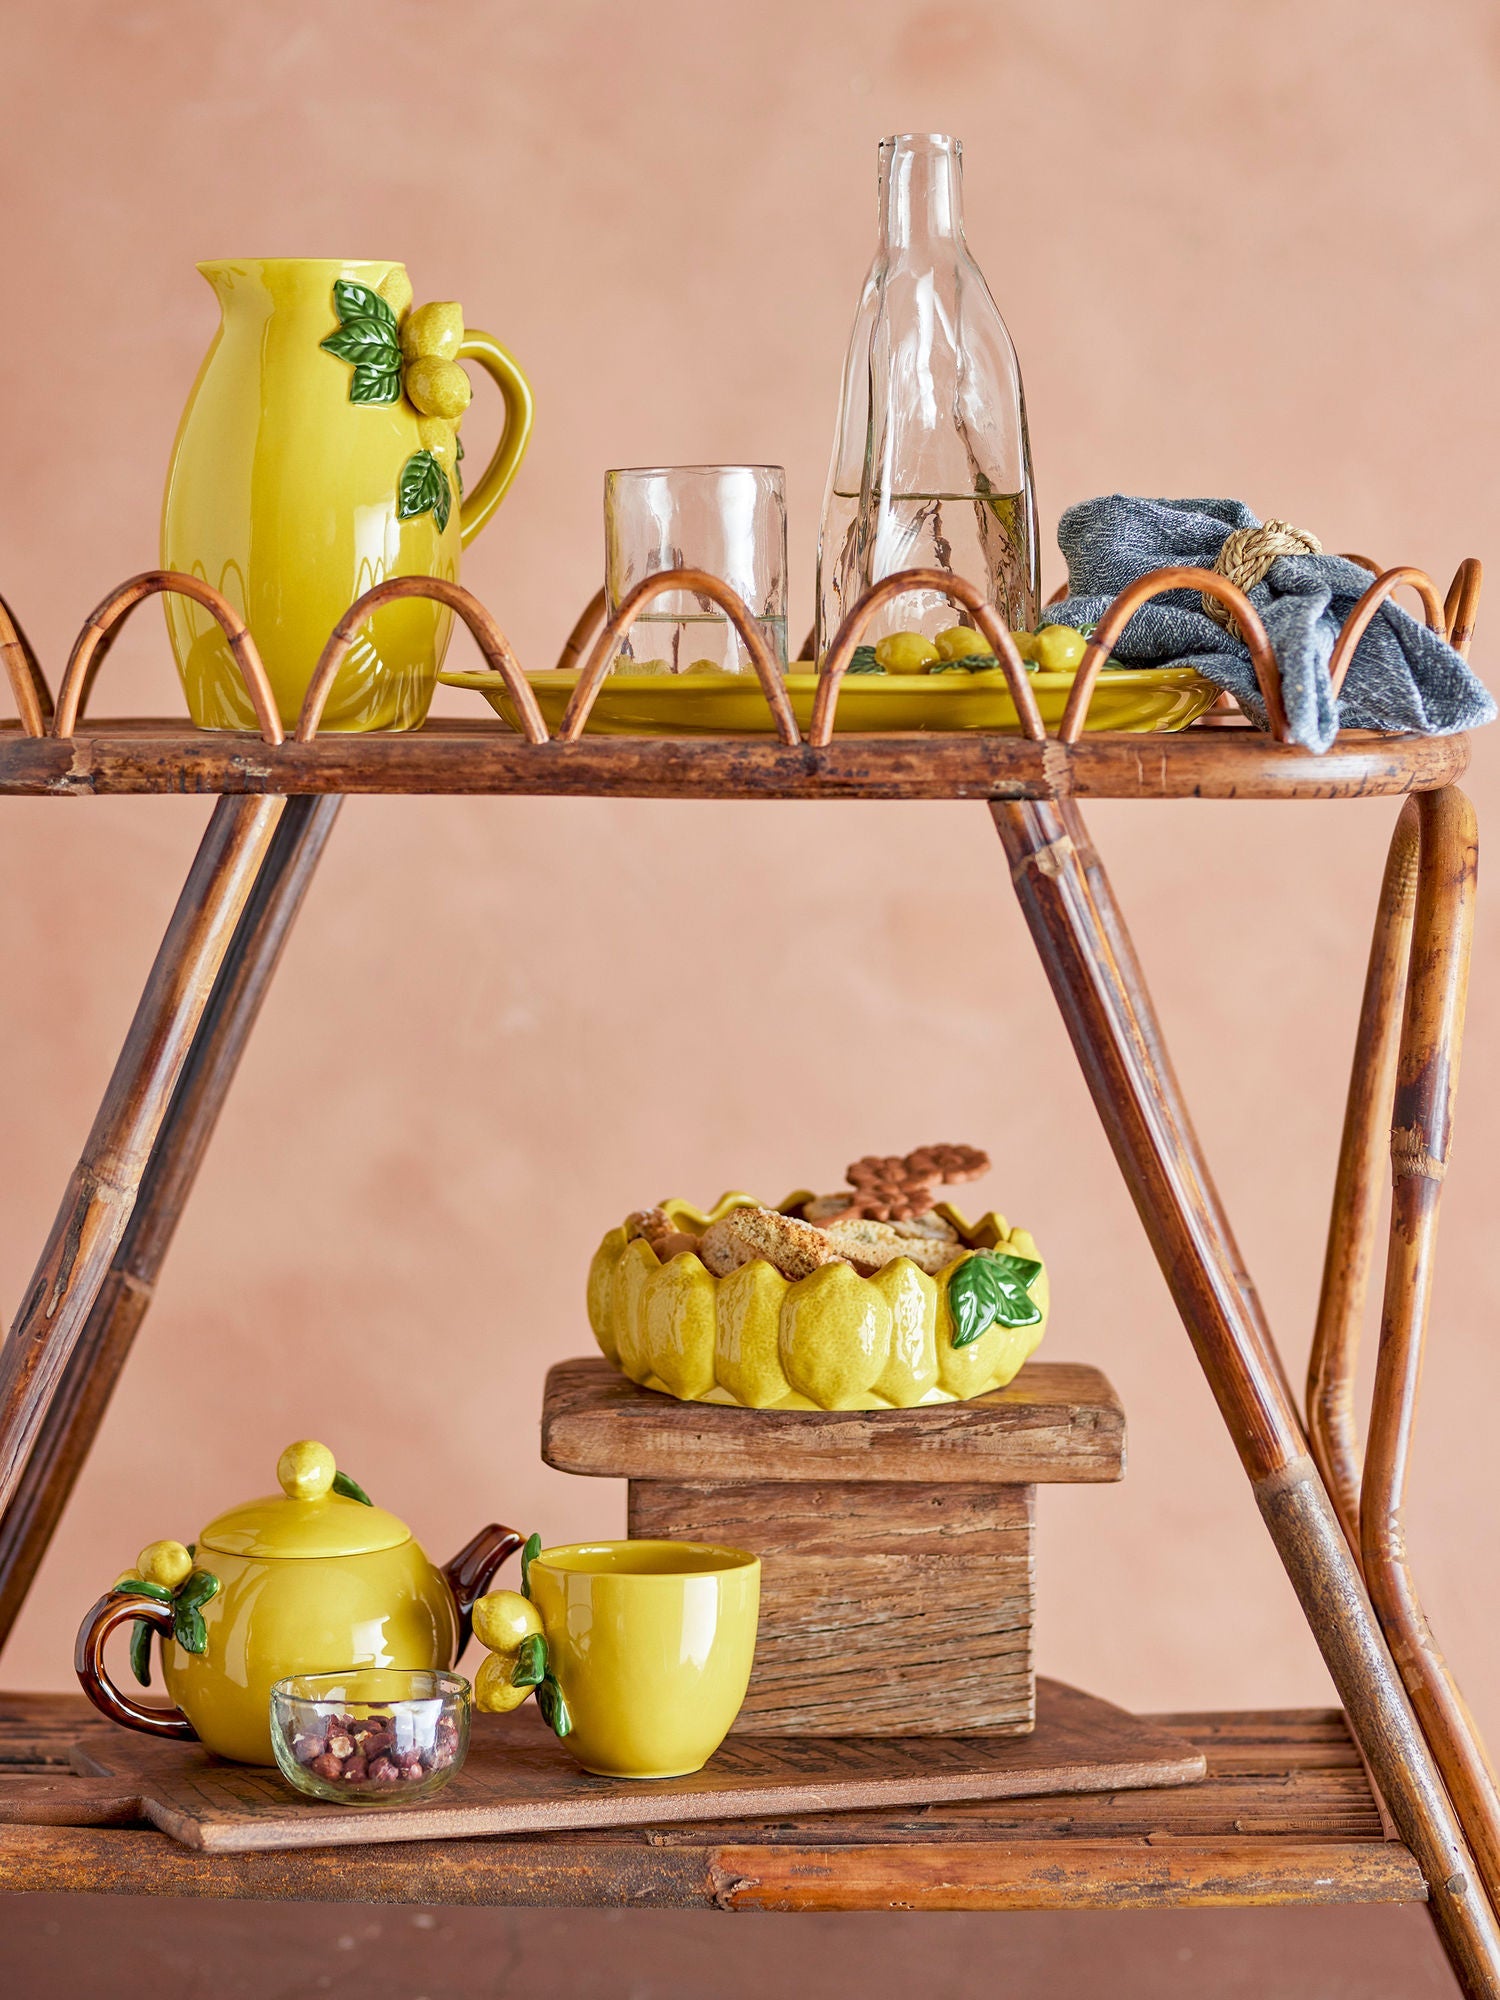 Creative Collection Limone Teapot, Yellow, Stoneware